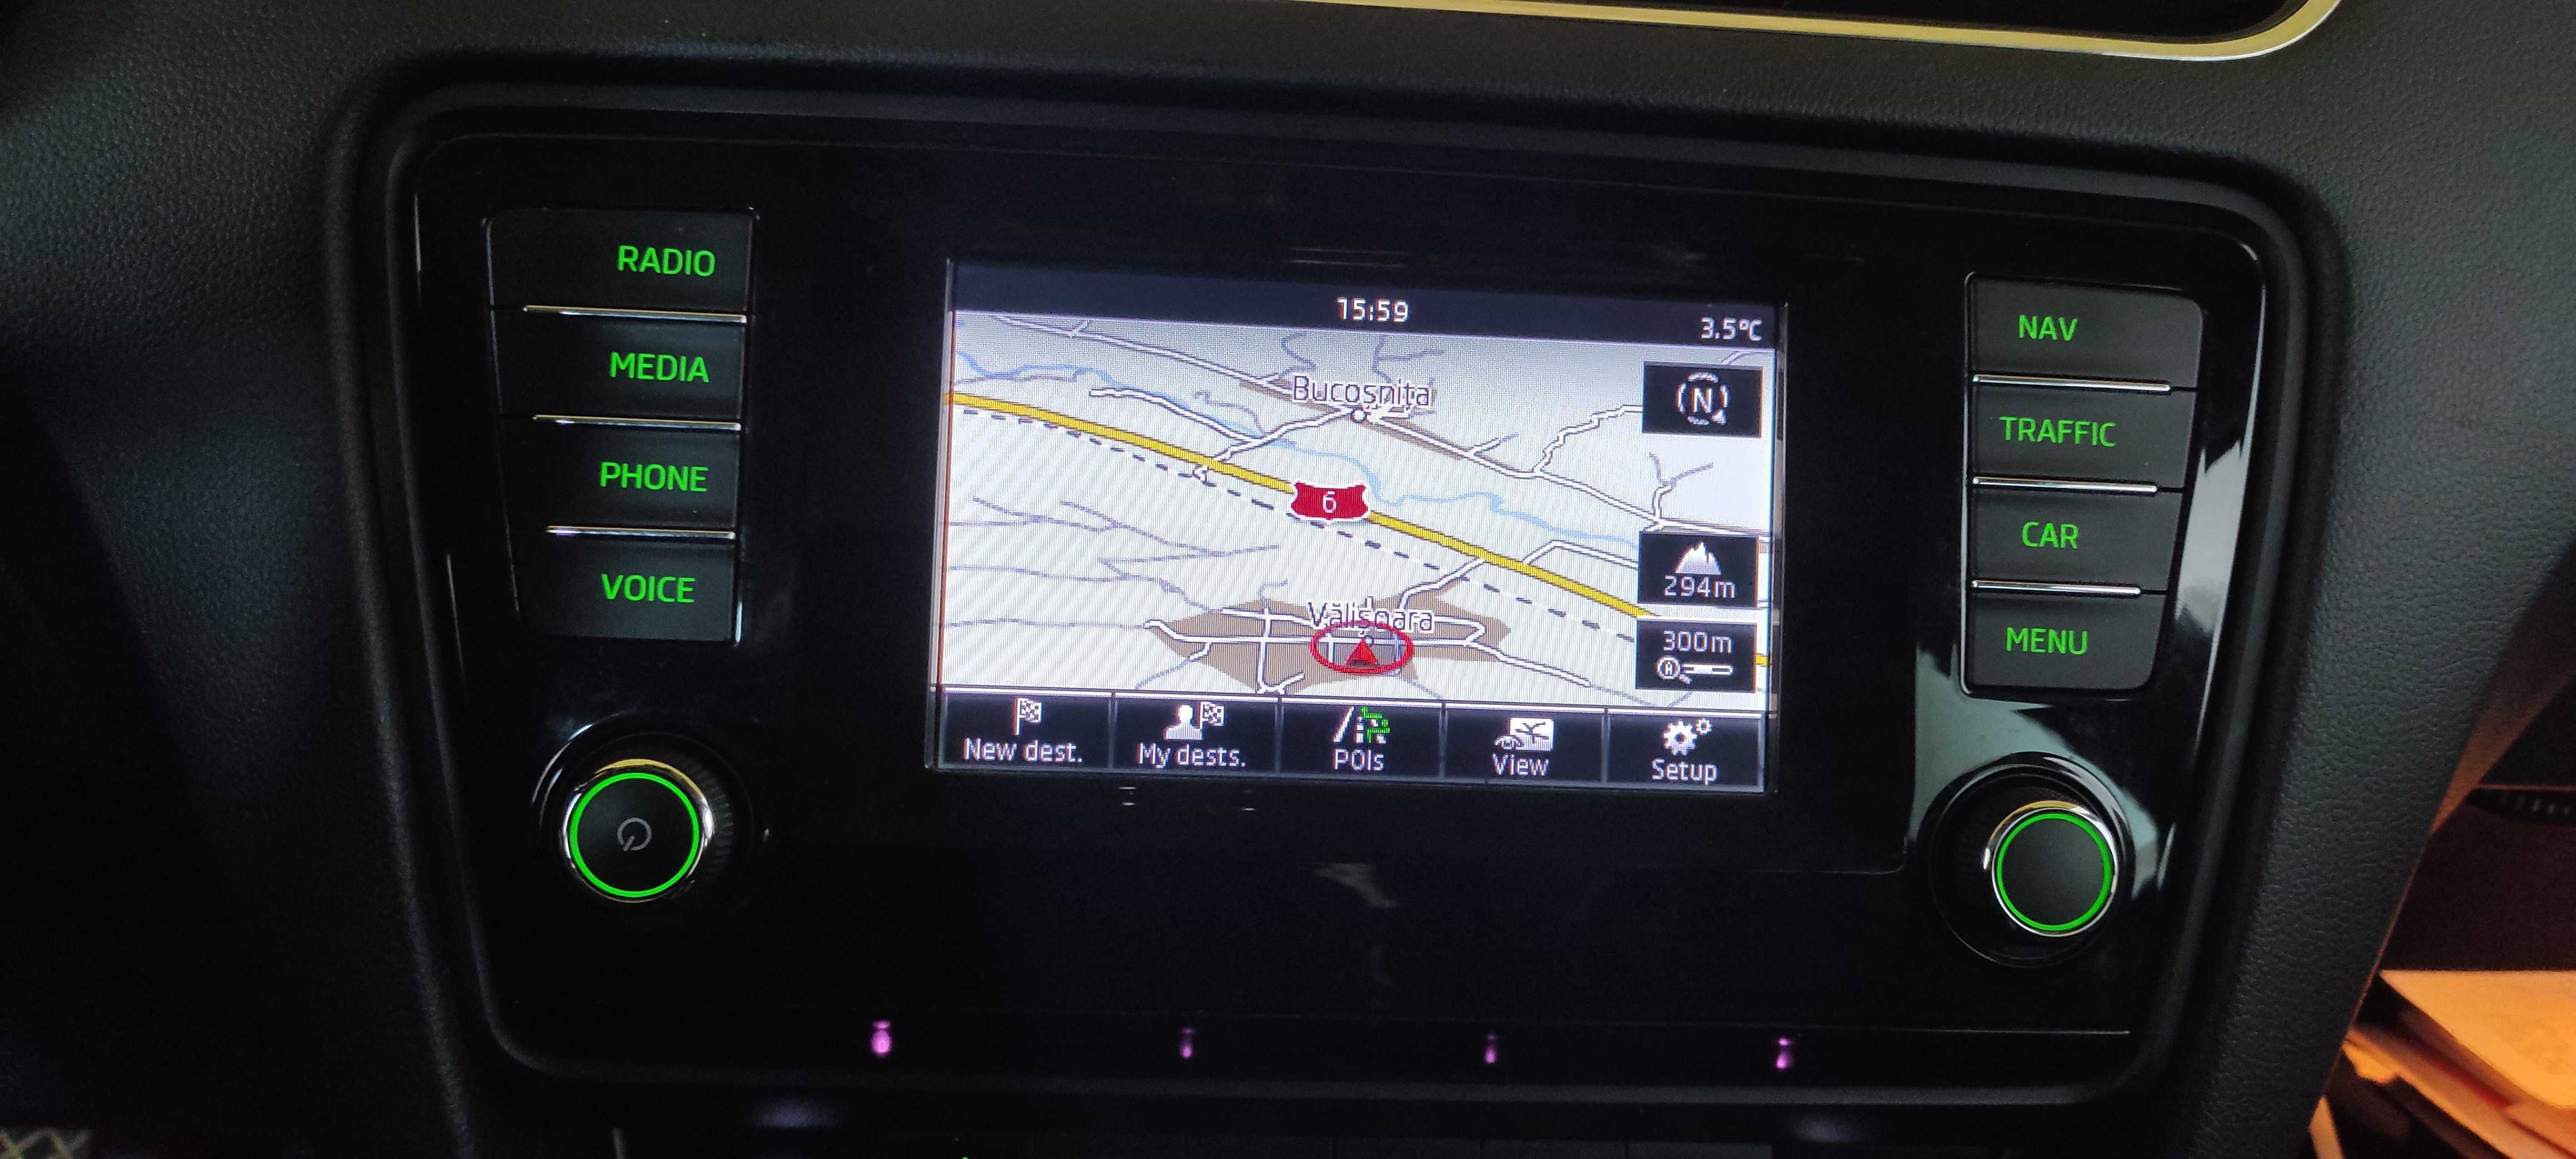 Navigatie Mib1 Skoda Octavia 3 (model 2015).